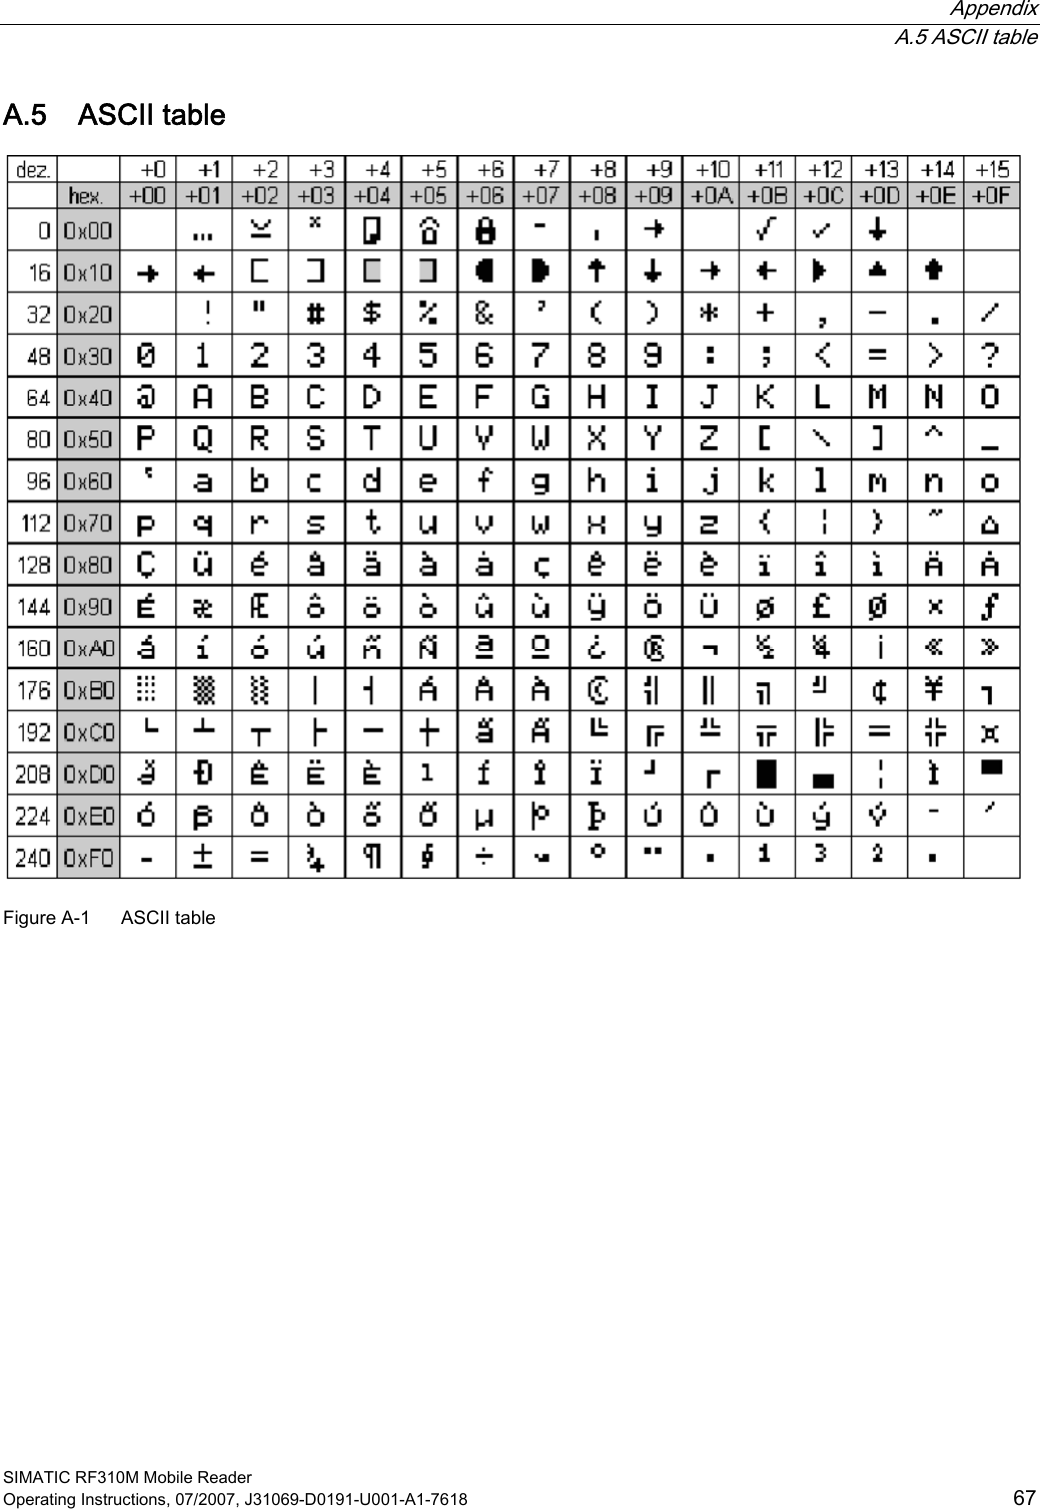  Appendix  A.5 ASCII table SIMATIC RF310M Mobile Reader Operating Instructions, 07/2007, J31069-D0191-U001-A1-7618  67 A.5 ASCII table  Figure A-1  ASCII table 